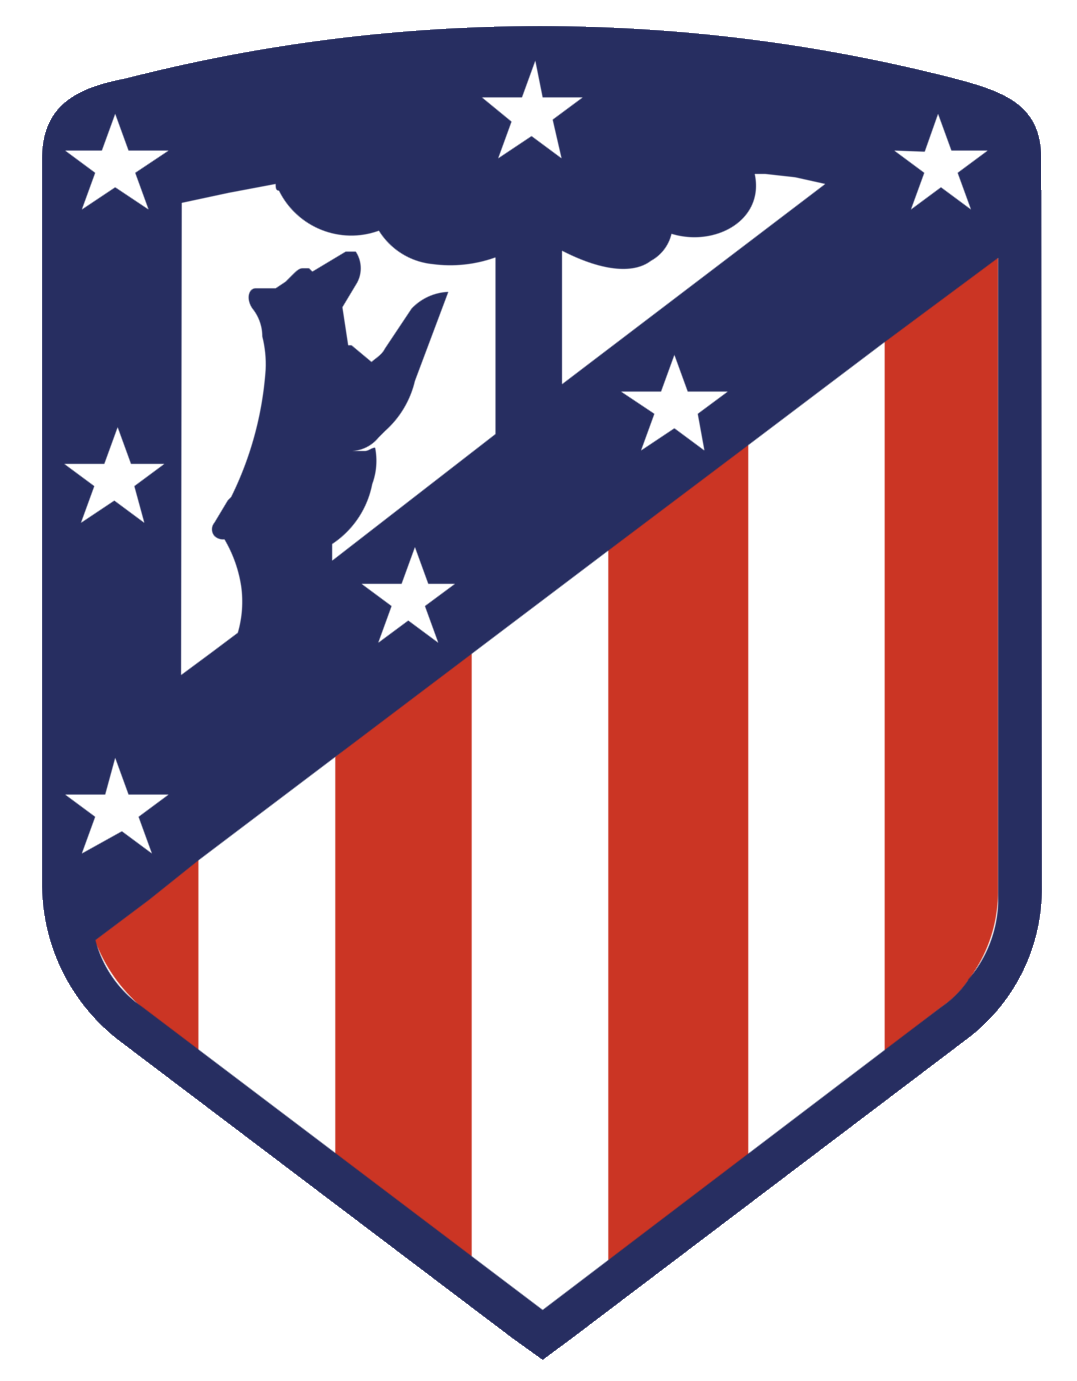 Wappen Club Atlético de Madrid  26165